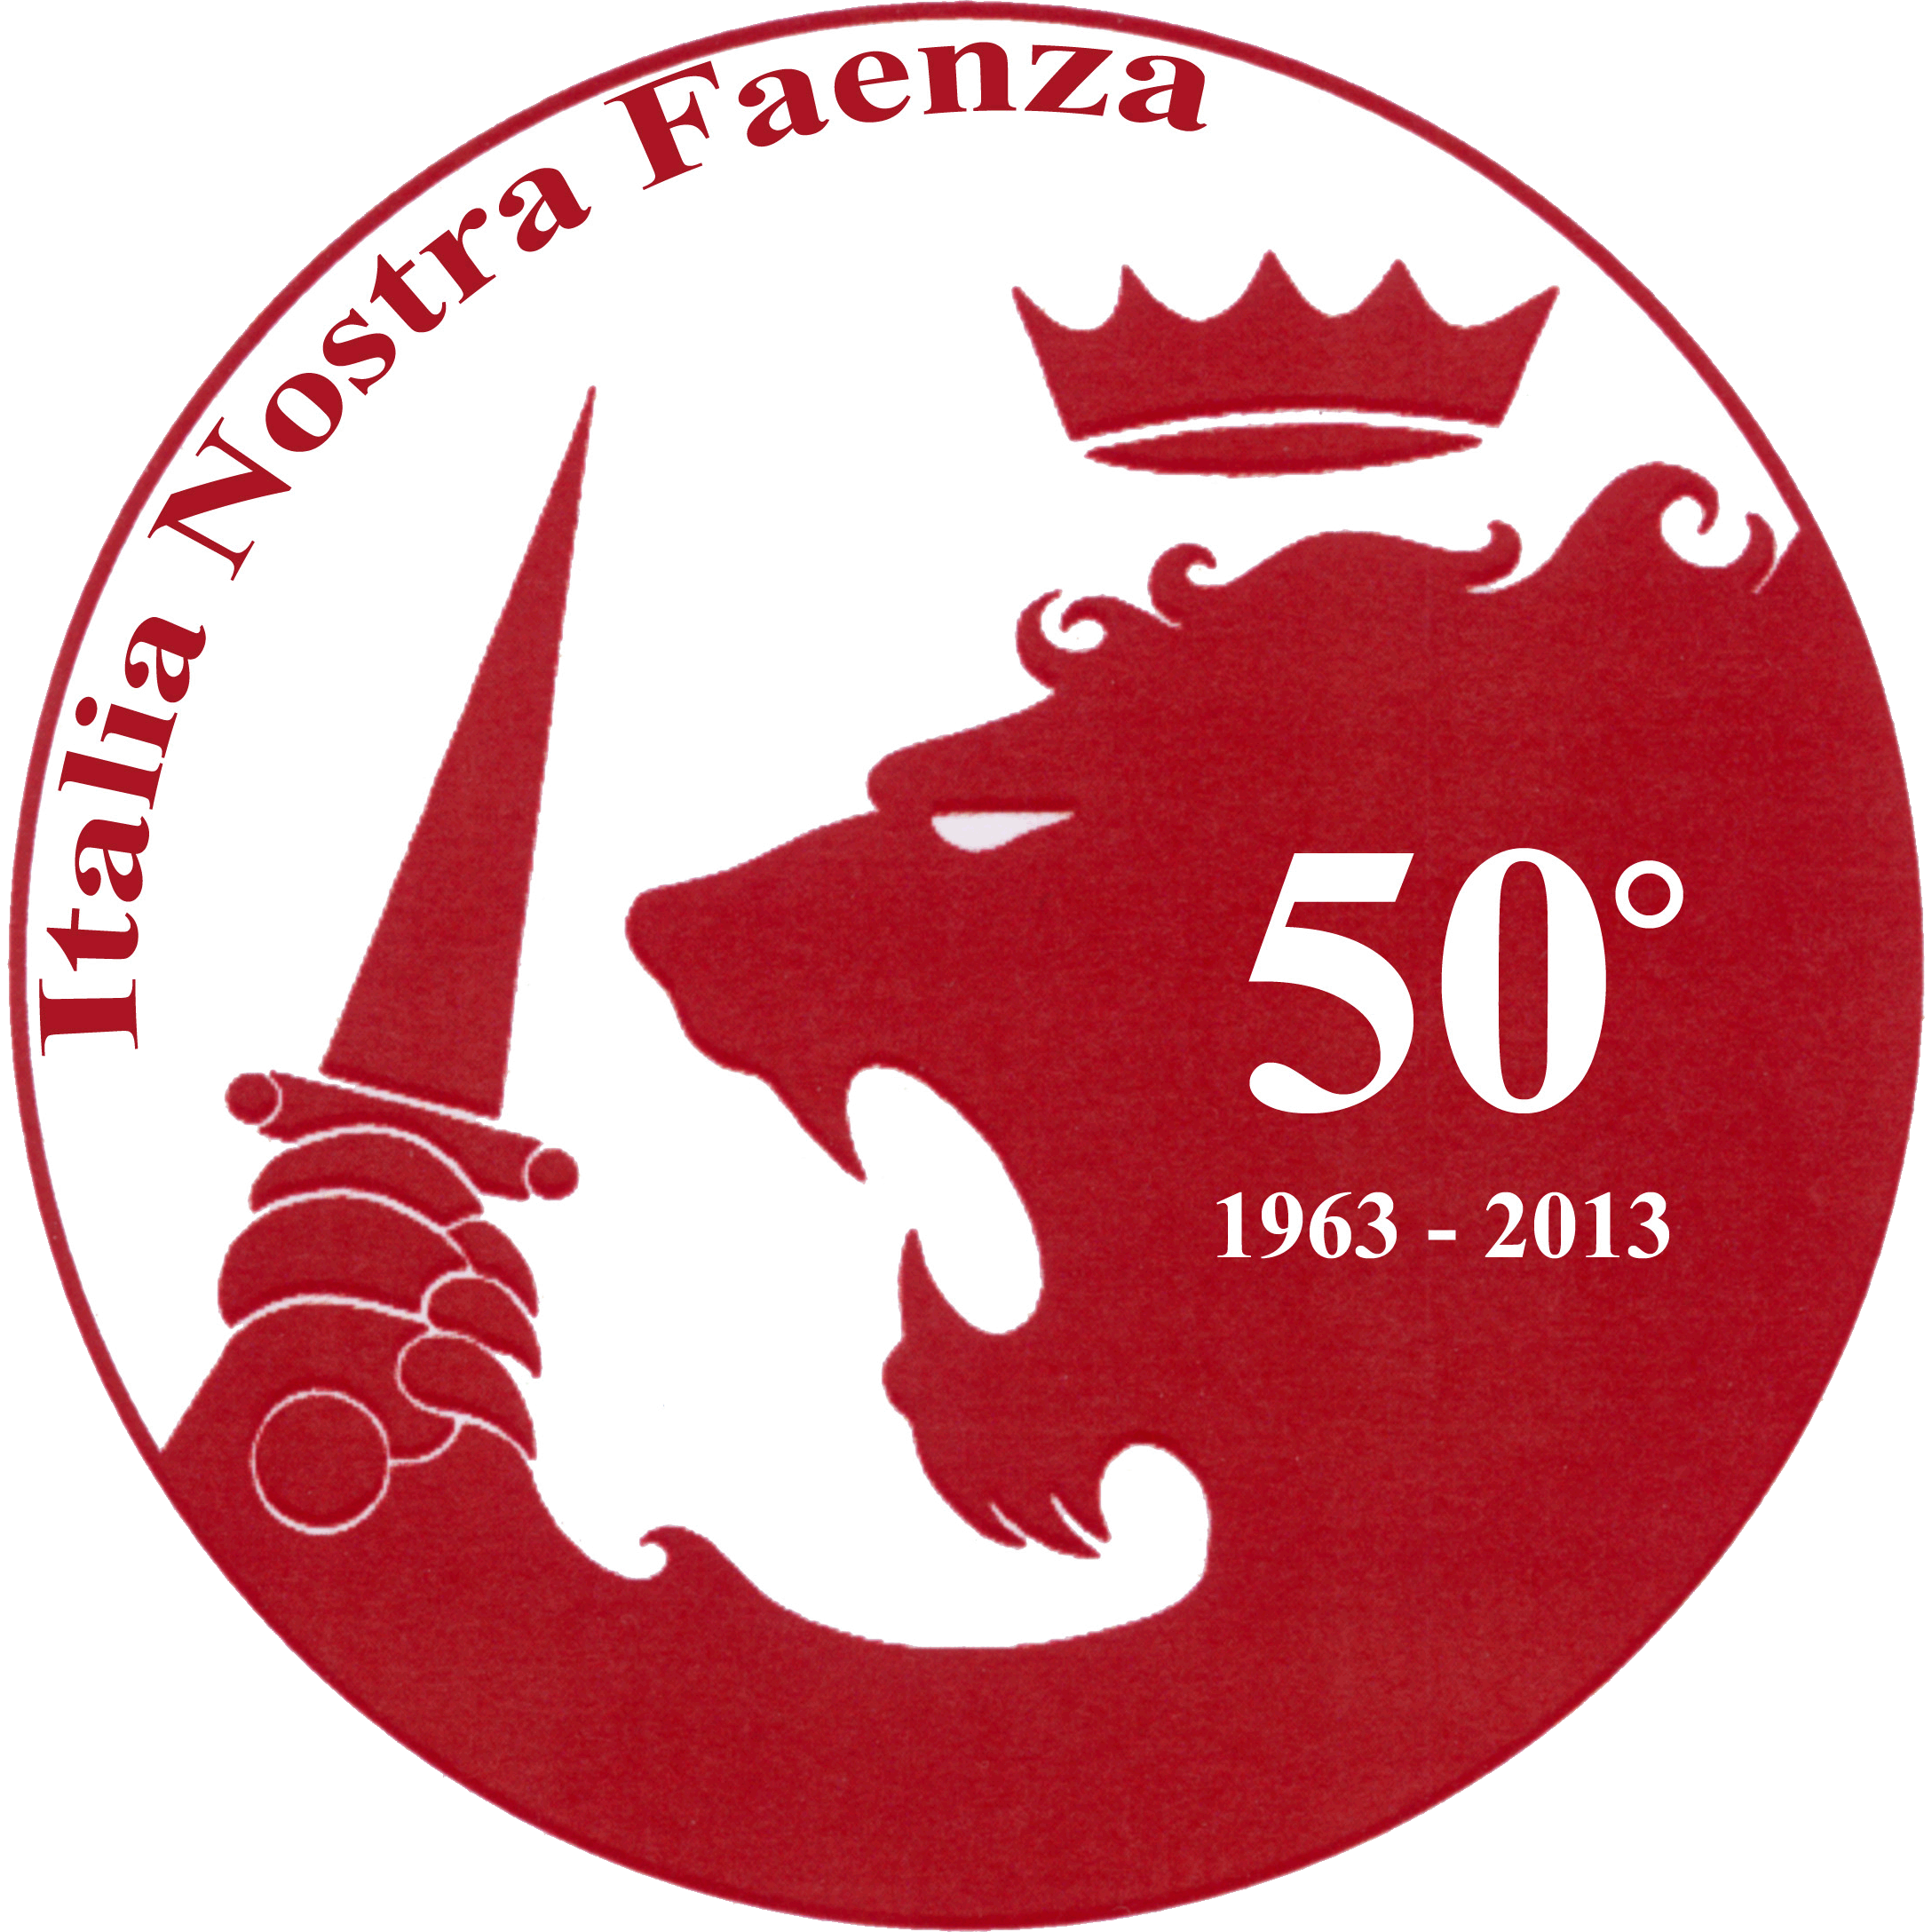 Italia Nostra Faenza Logo